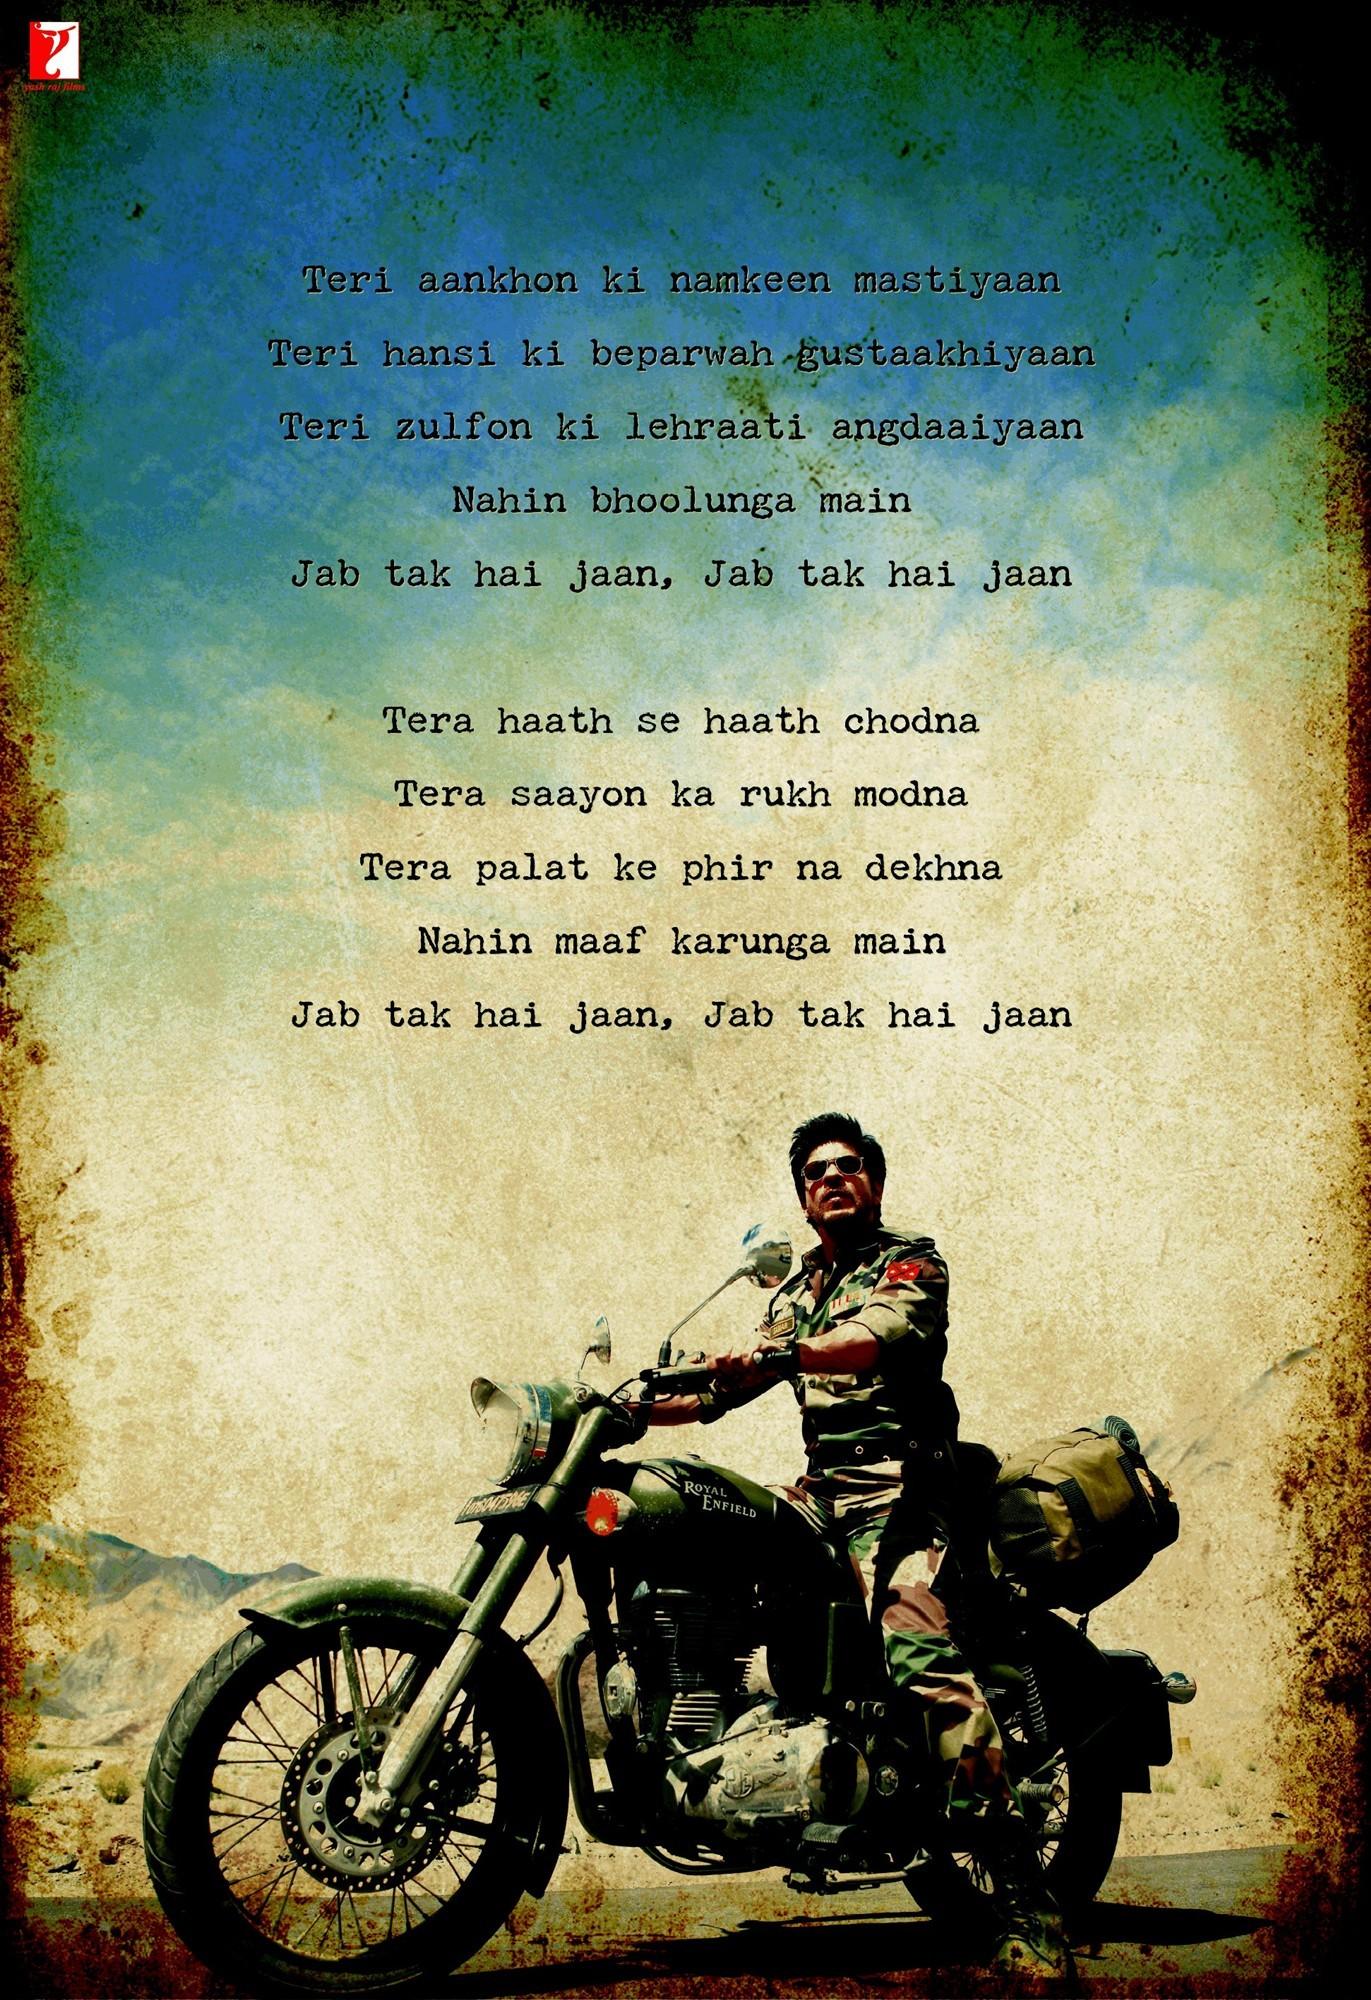 Poster of Yash Raj Films' Jab Tak Hai Jaan (2012)